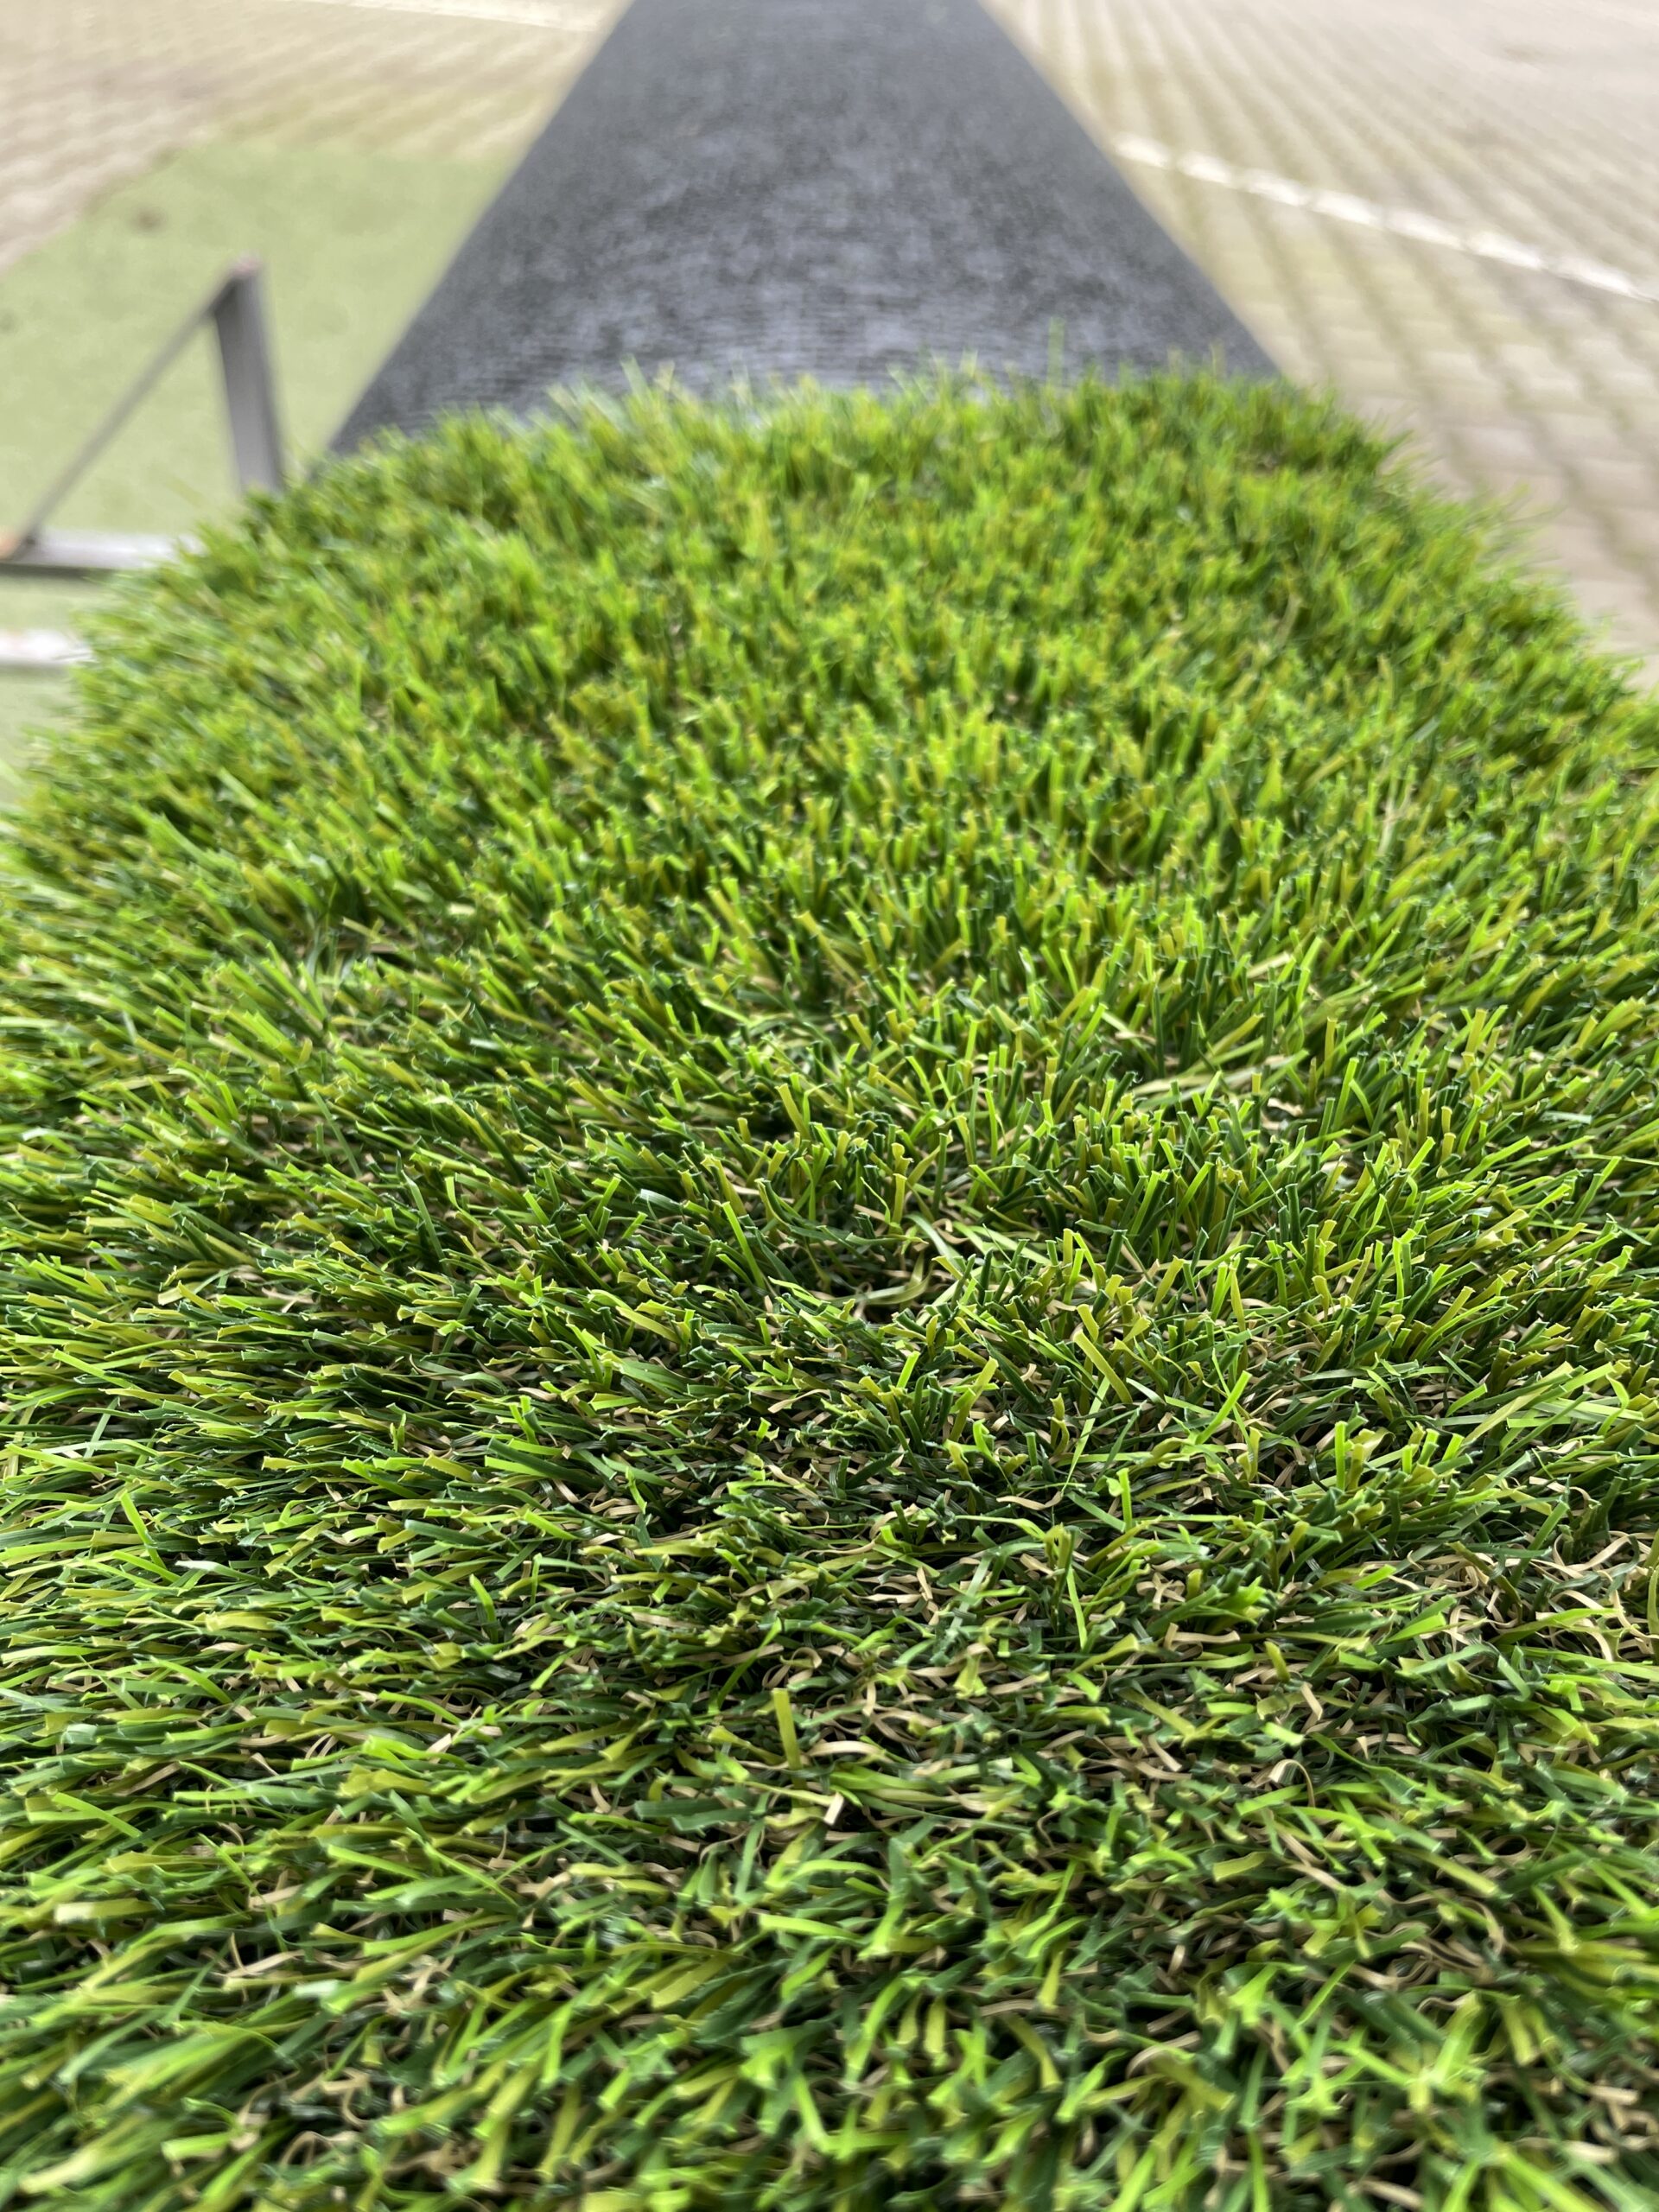  Artificial Grass Cheap - Shop High-Quality Artificial Grass at The Best Price thumbnail